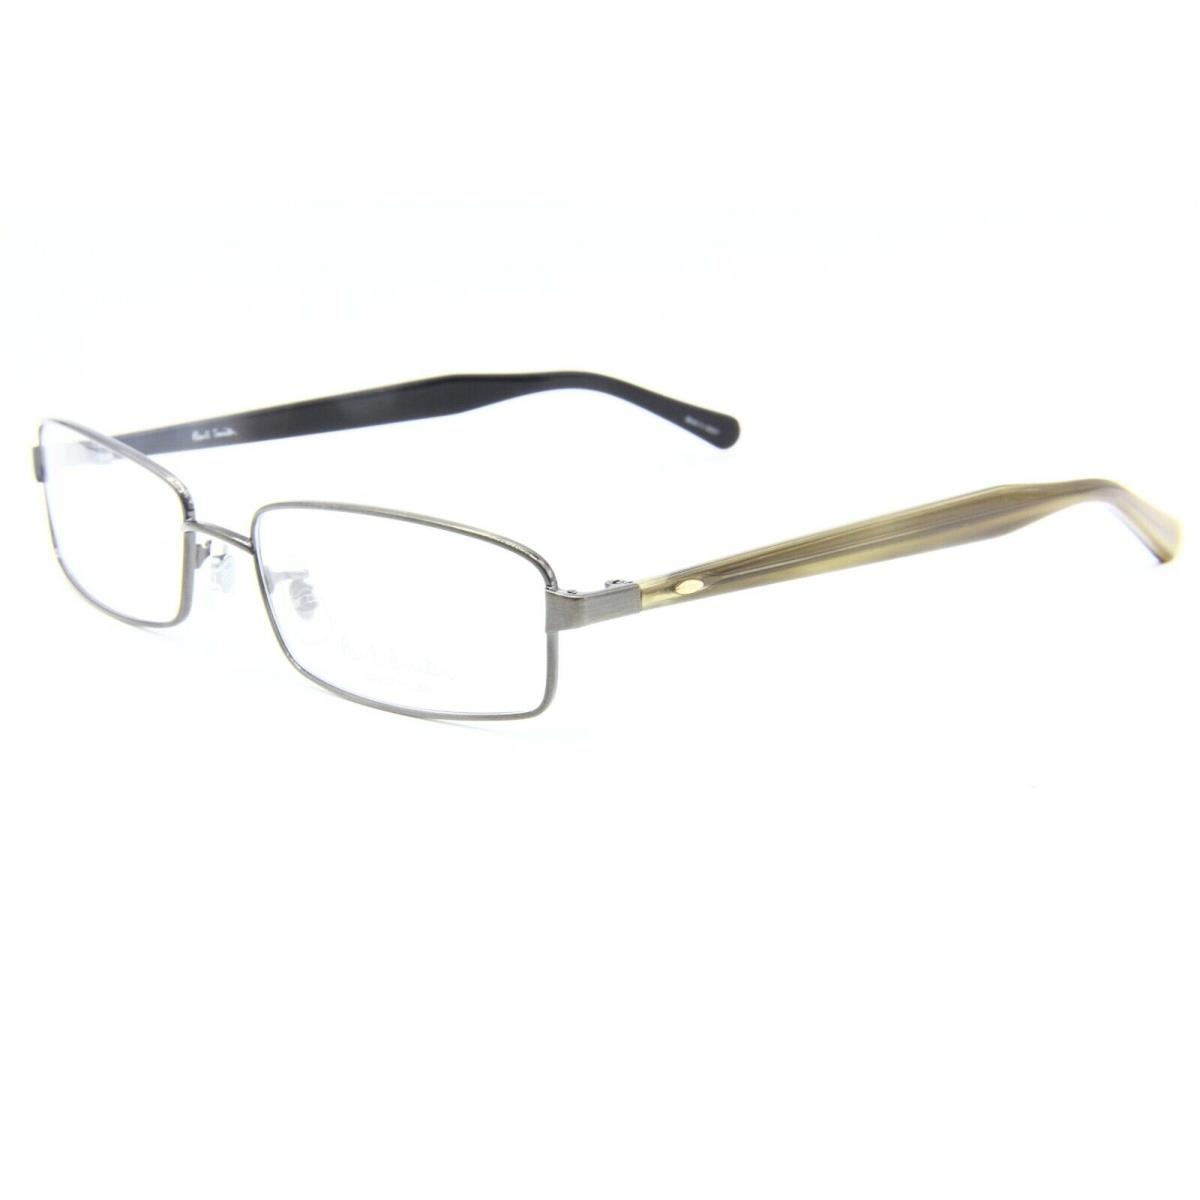 Paul Smith PS-1009 A/otox Gunmetal Eyeglasses Frame RX 53-17